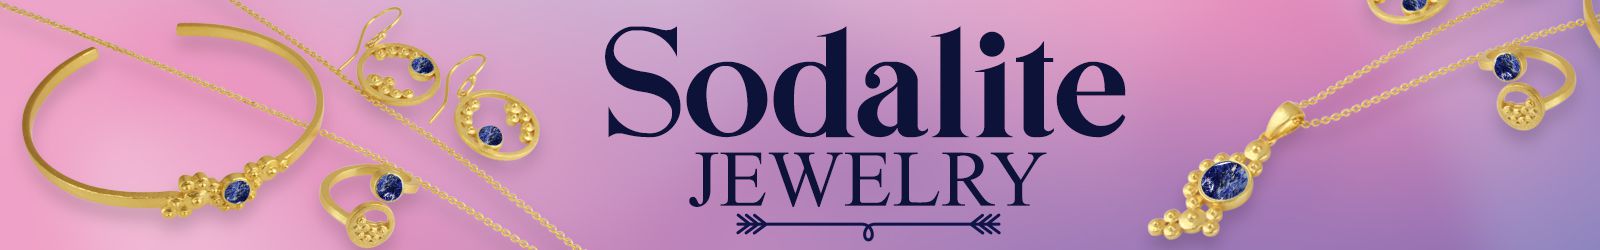 Silver Sodalite Jewelry Wholesale Supplier